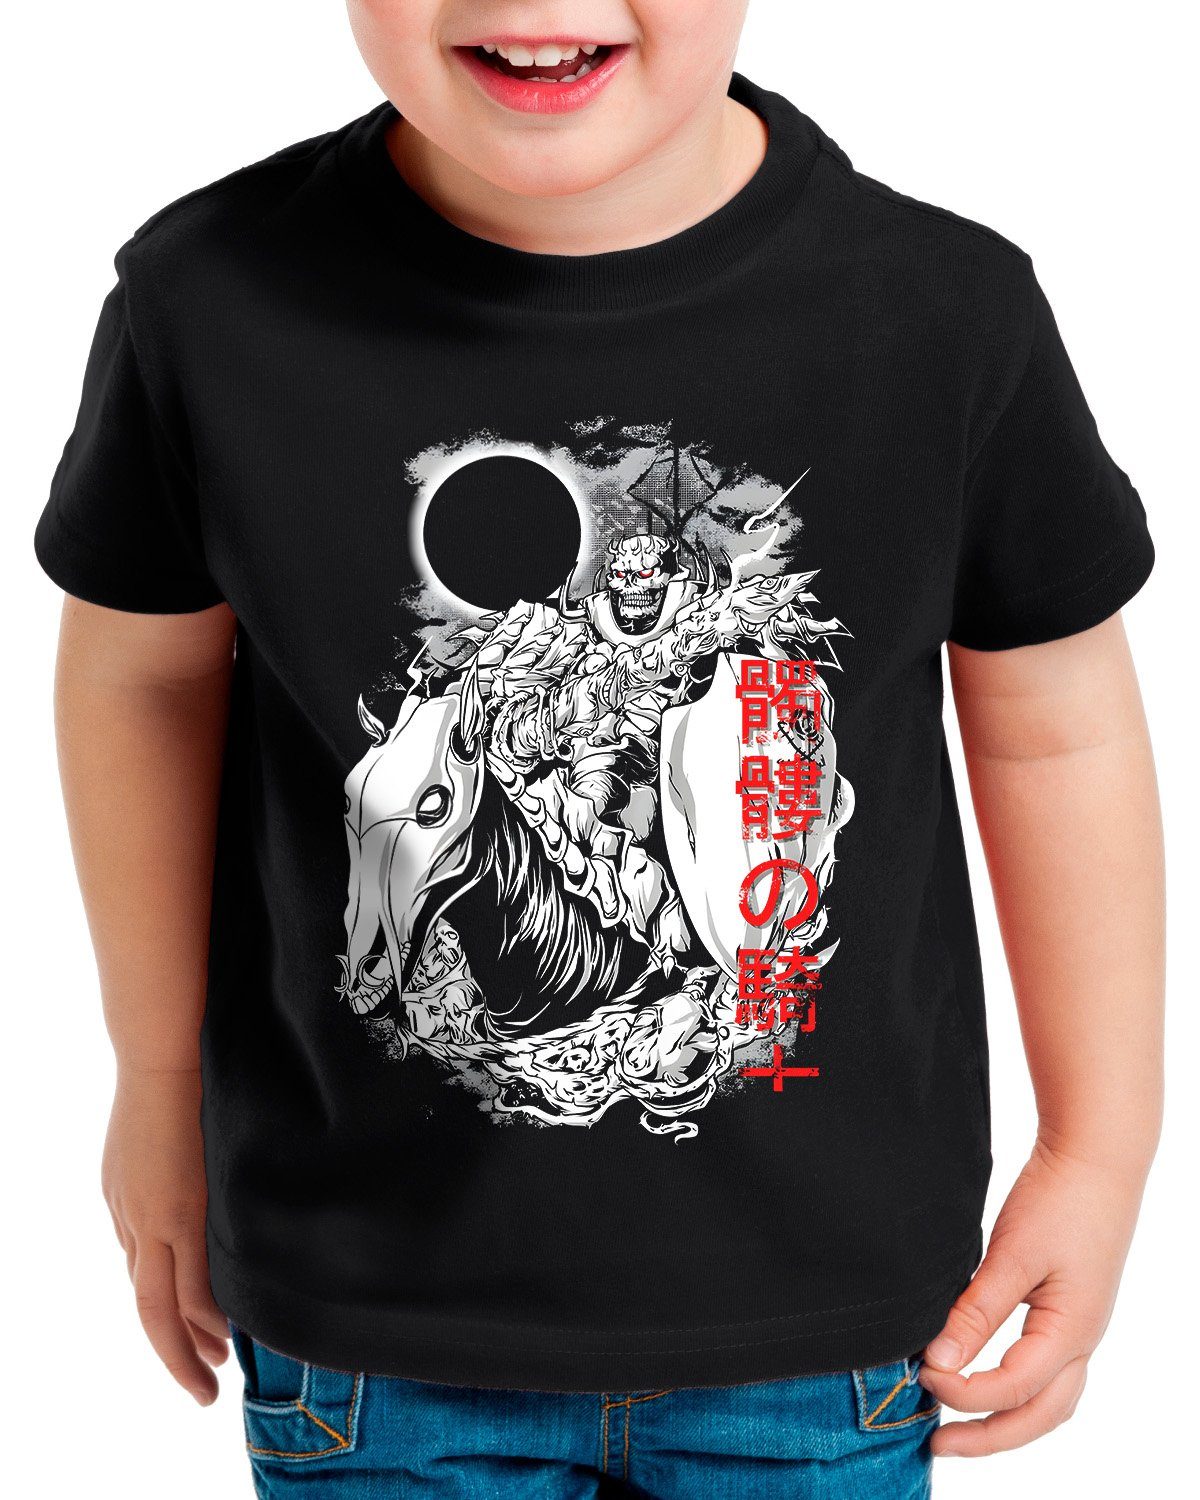 style3 Print-Shirt Kinder T-Shirt Legendary Knight berserk anime manga japan cosplay